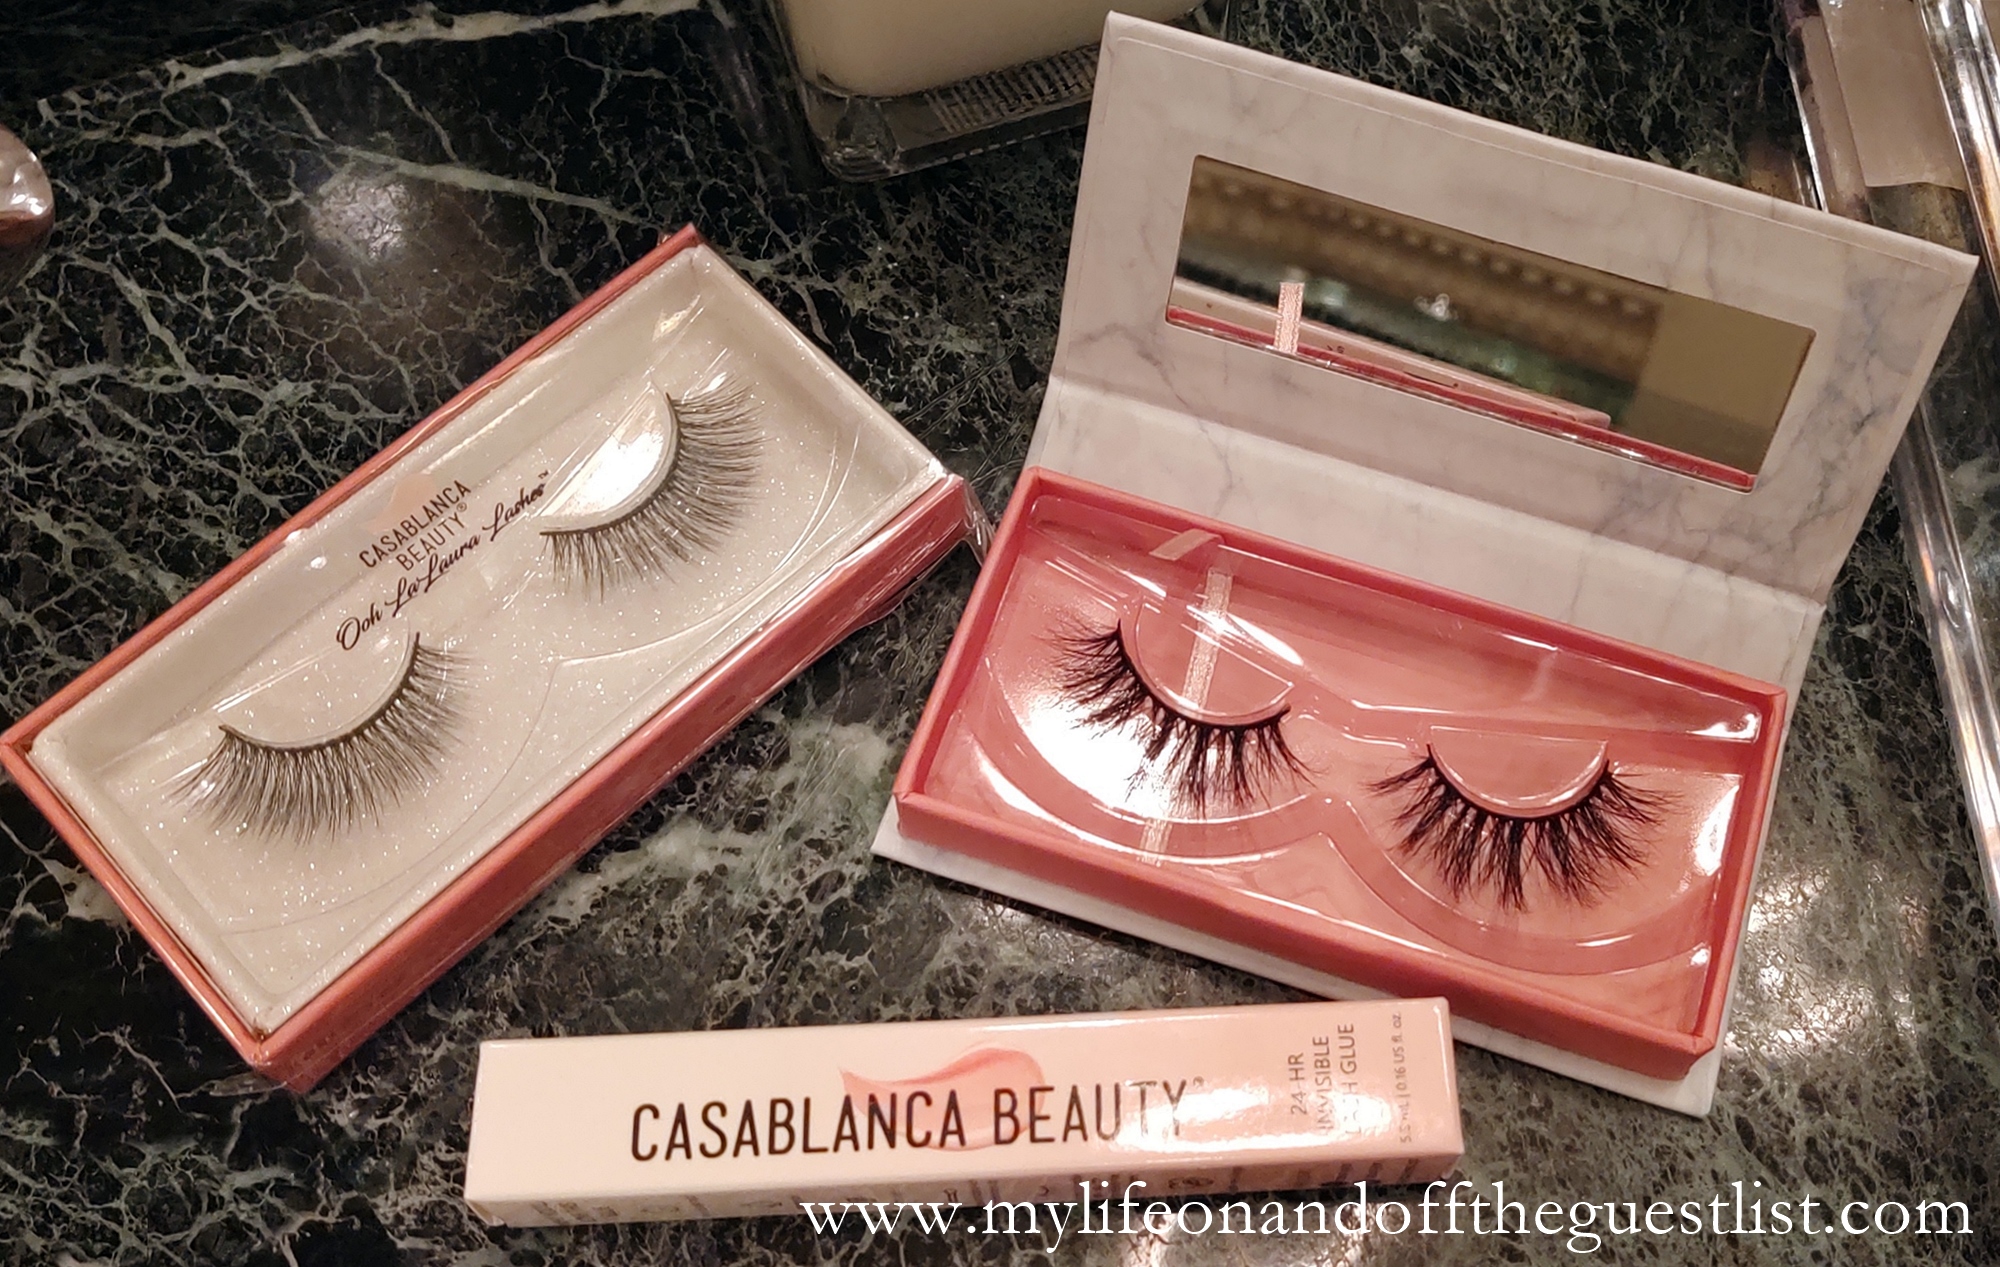 New Product Launch: Casablanca Beauty Ooh La Laura Lashes